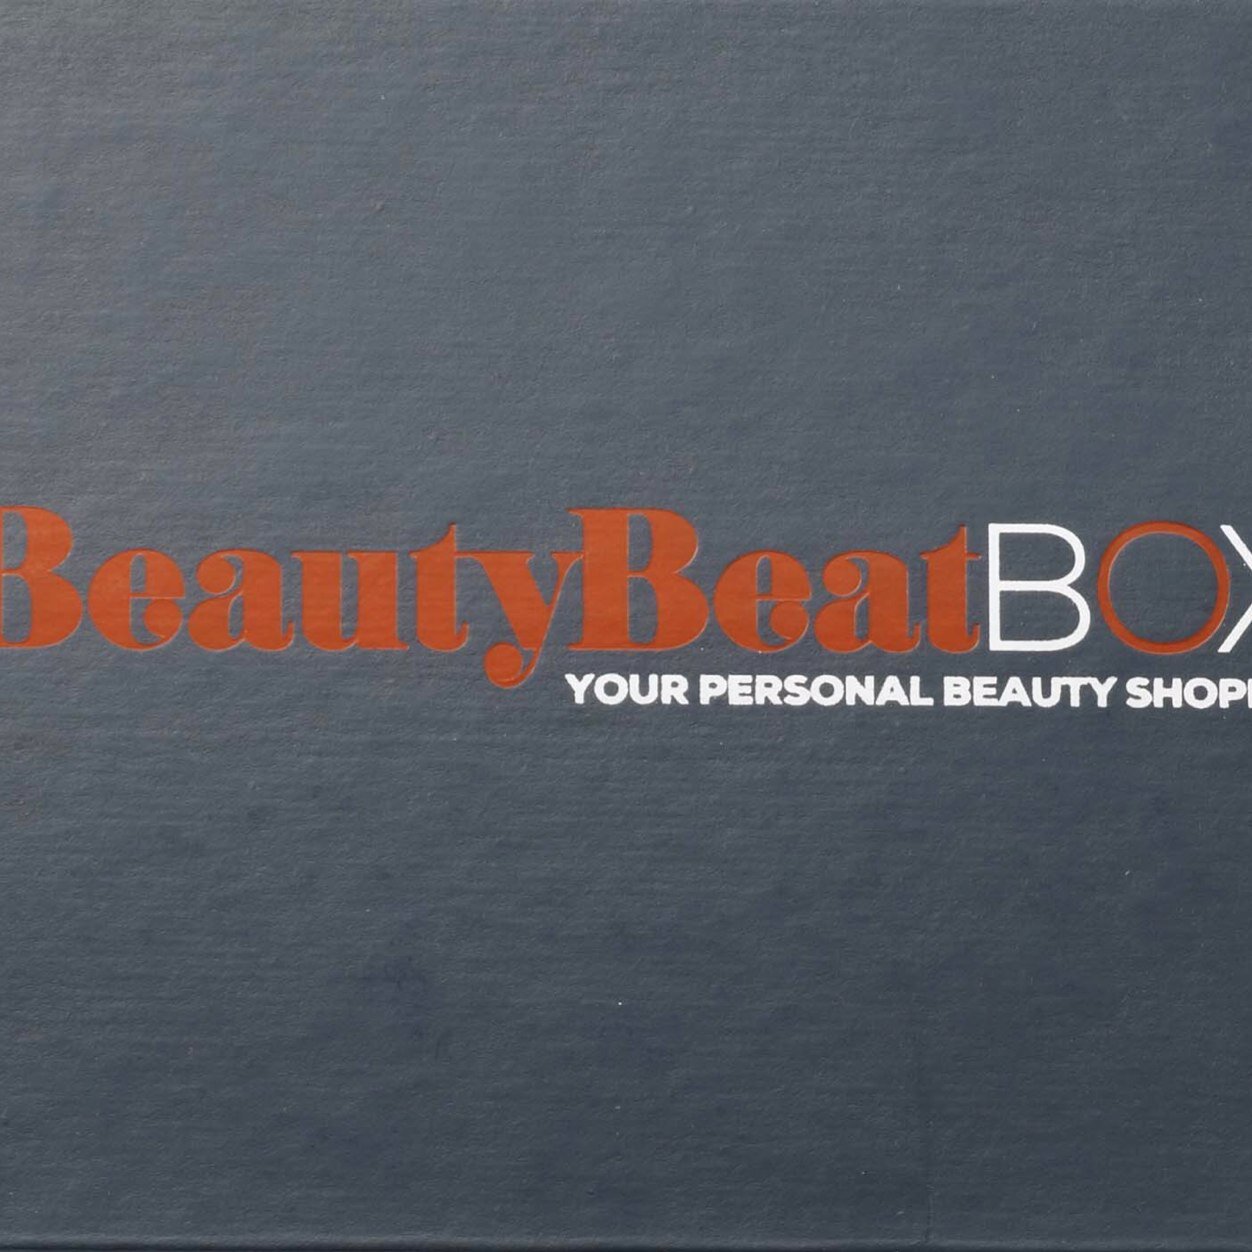 beautybeatbox